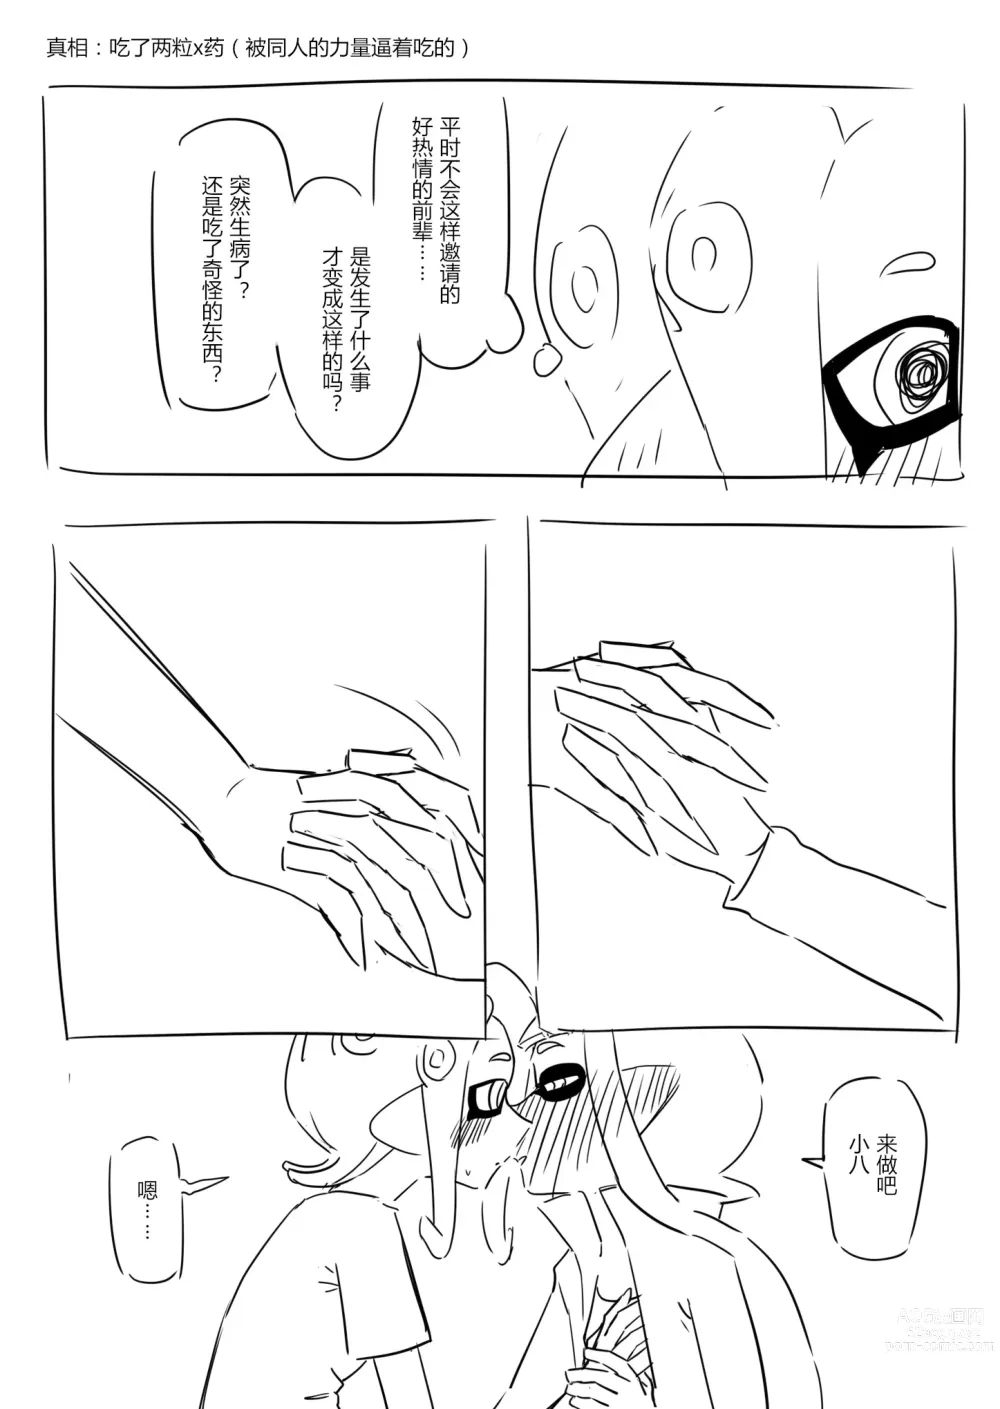 Page 9 of doujinshi 想不出标题了